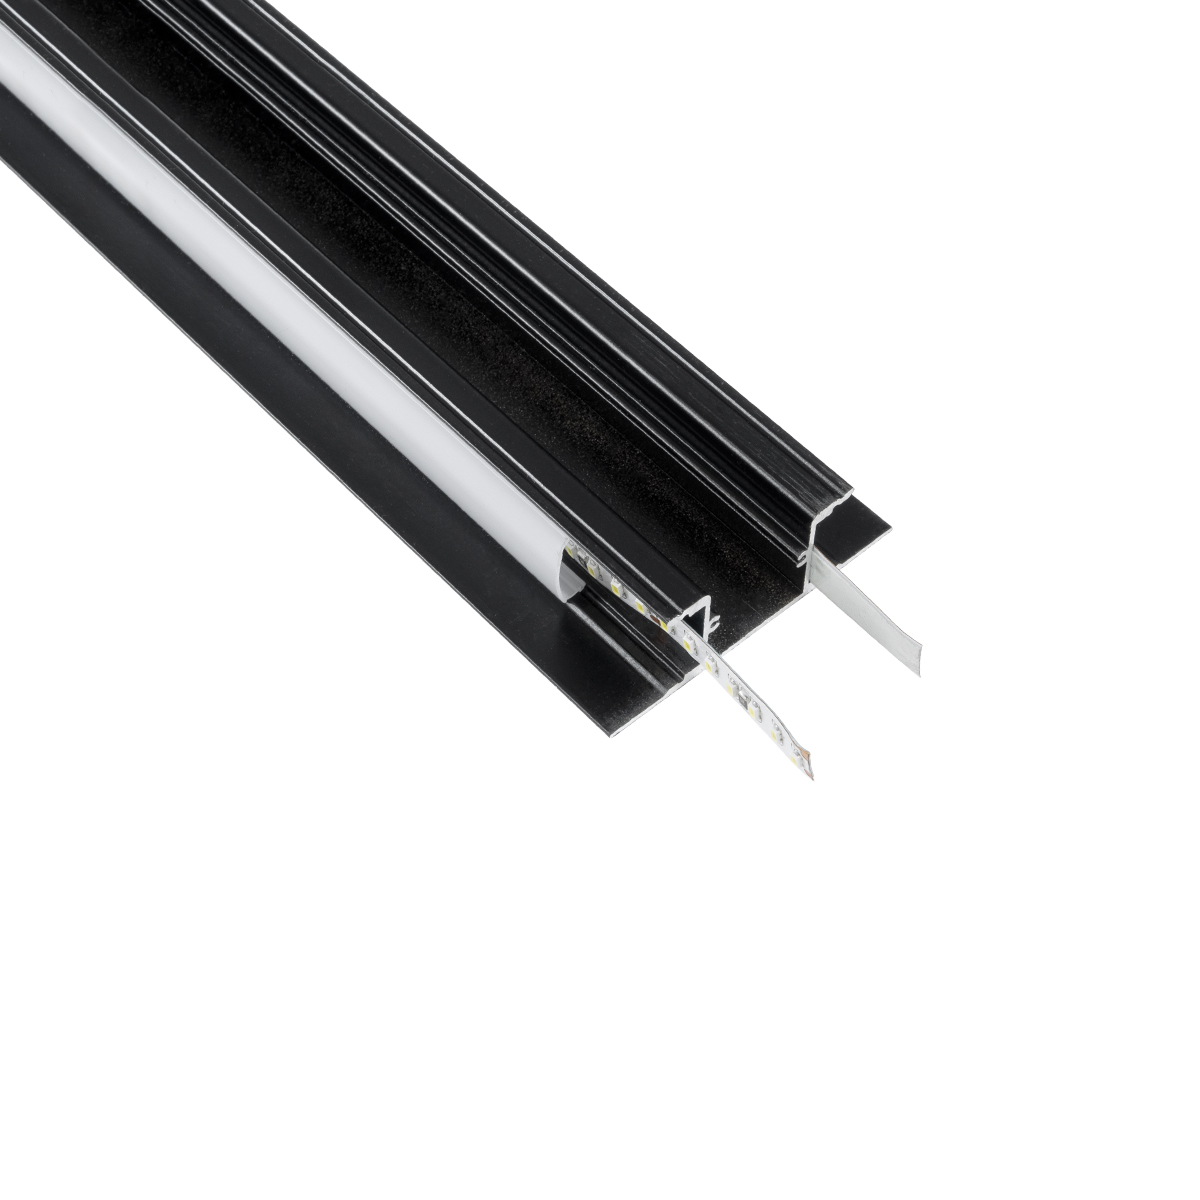 GloboStar® SURFACE-PROFILE 70845-3M Προφίλ Αλουμινίου – Βάση & Ψύκτρα Ταινίας LED με Λευκό Γαλακτερό Κάλυμμα – Επιφανειακή Χρήση Δημιουργίας Κρυφού Φωτισμού Πάνω/Κάτω – Πατητό Κάλυμμα – Μαύρο – 3 Μέτρα – Μ300 x Π5 x Υ1.7cm